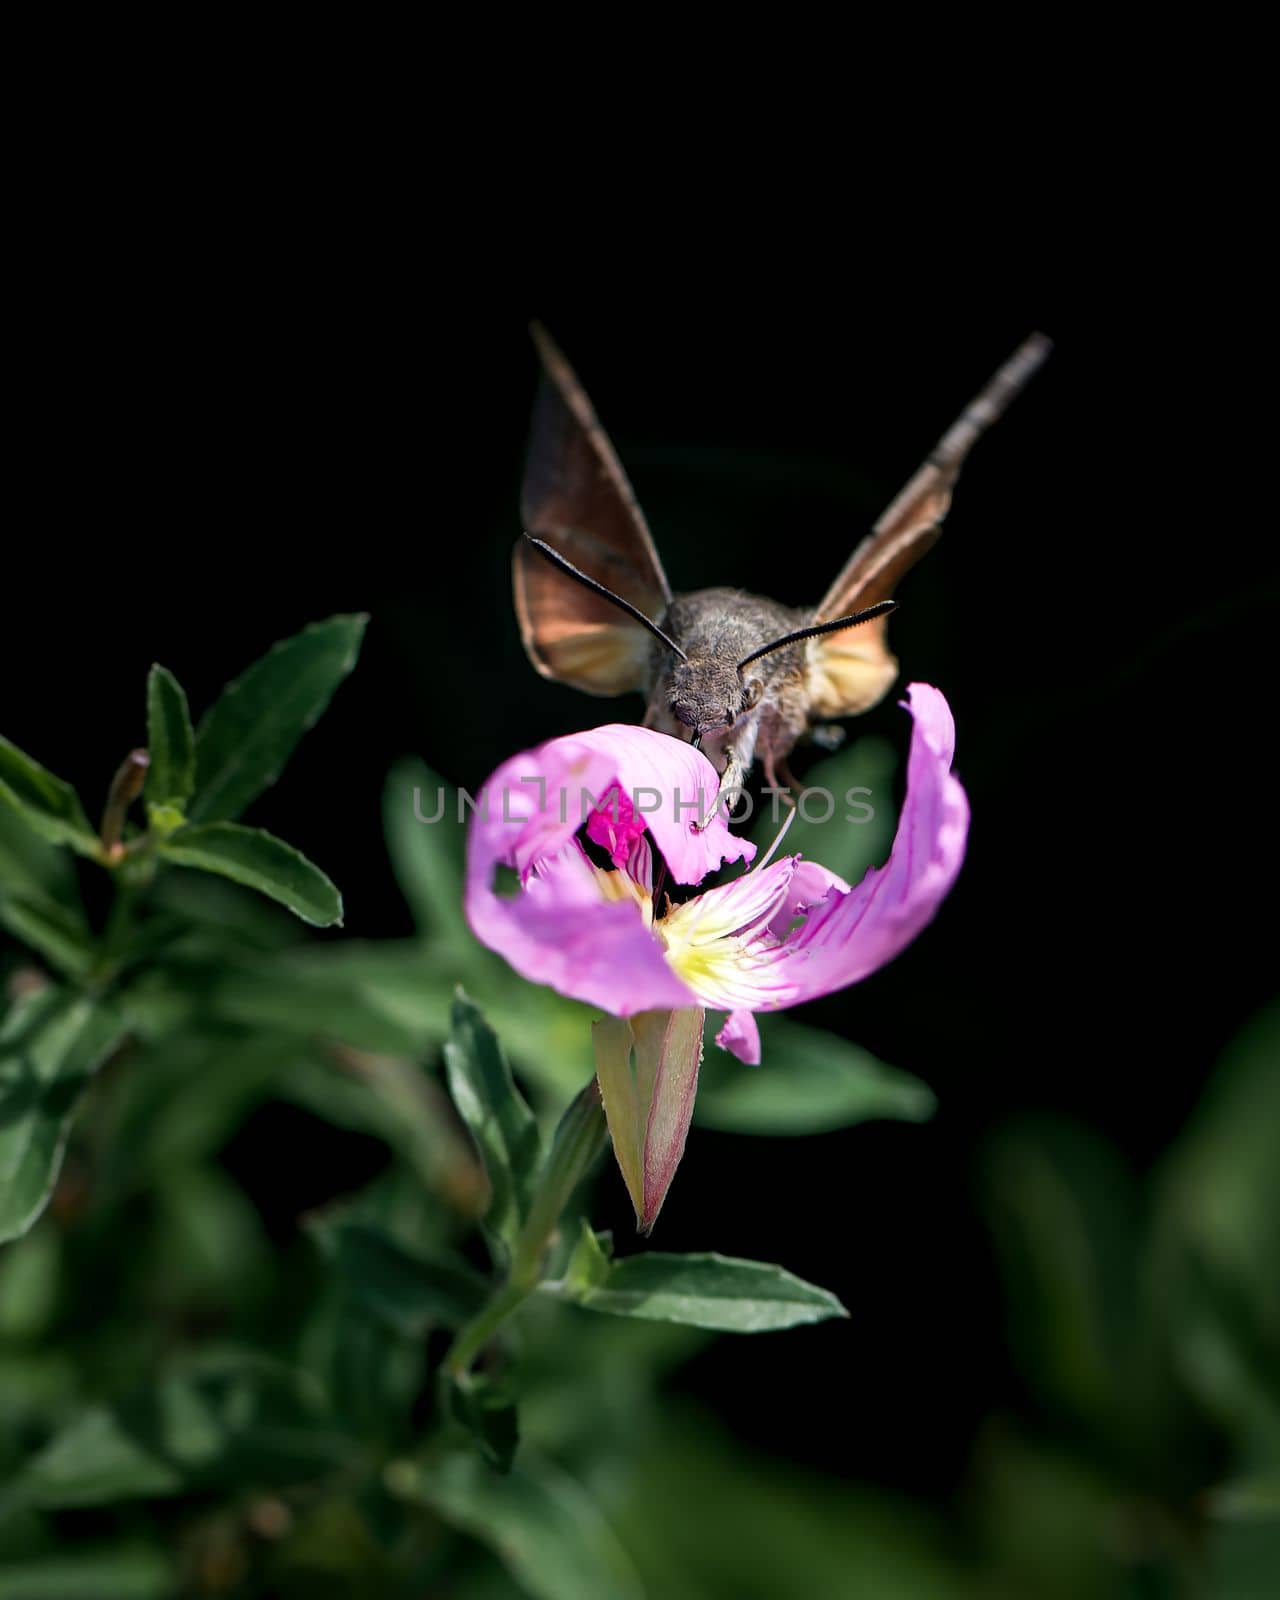 Flying Hummingbird or hawk-moth photo, close-up photo of hummingbird hawk-moth